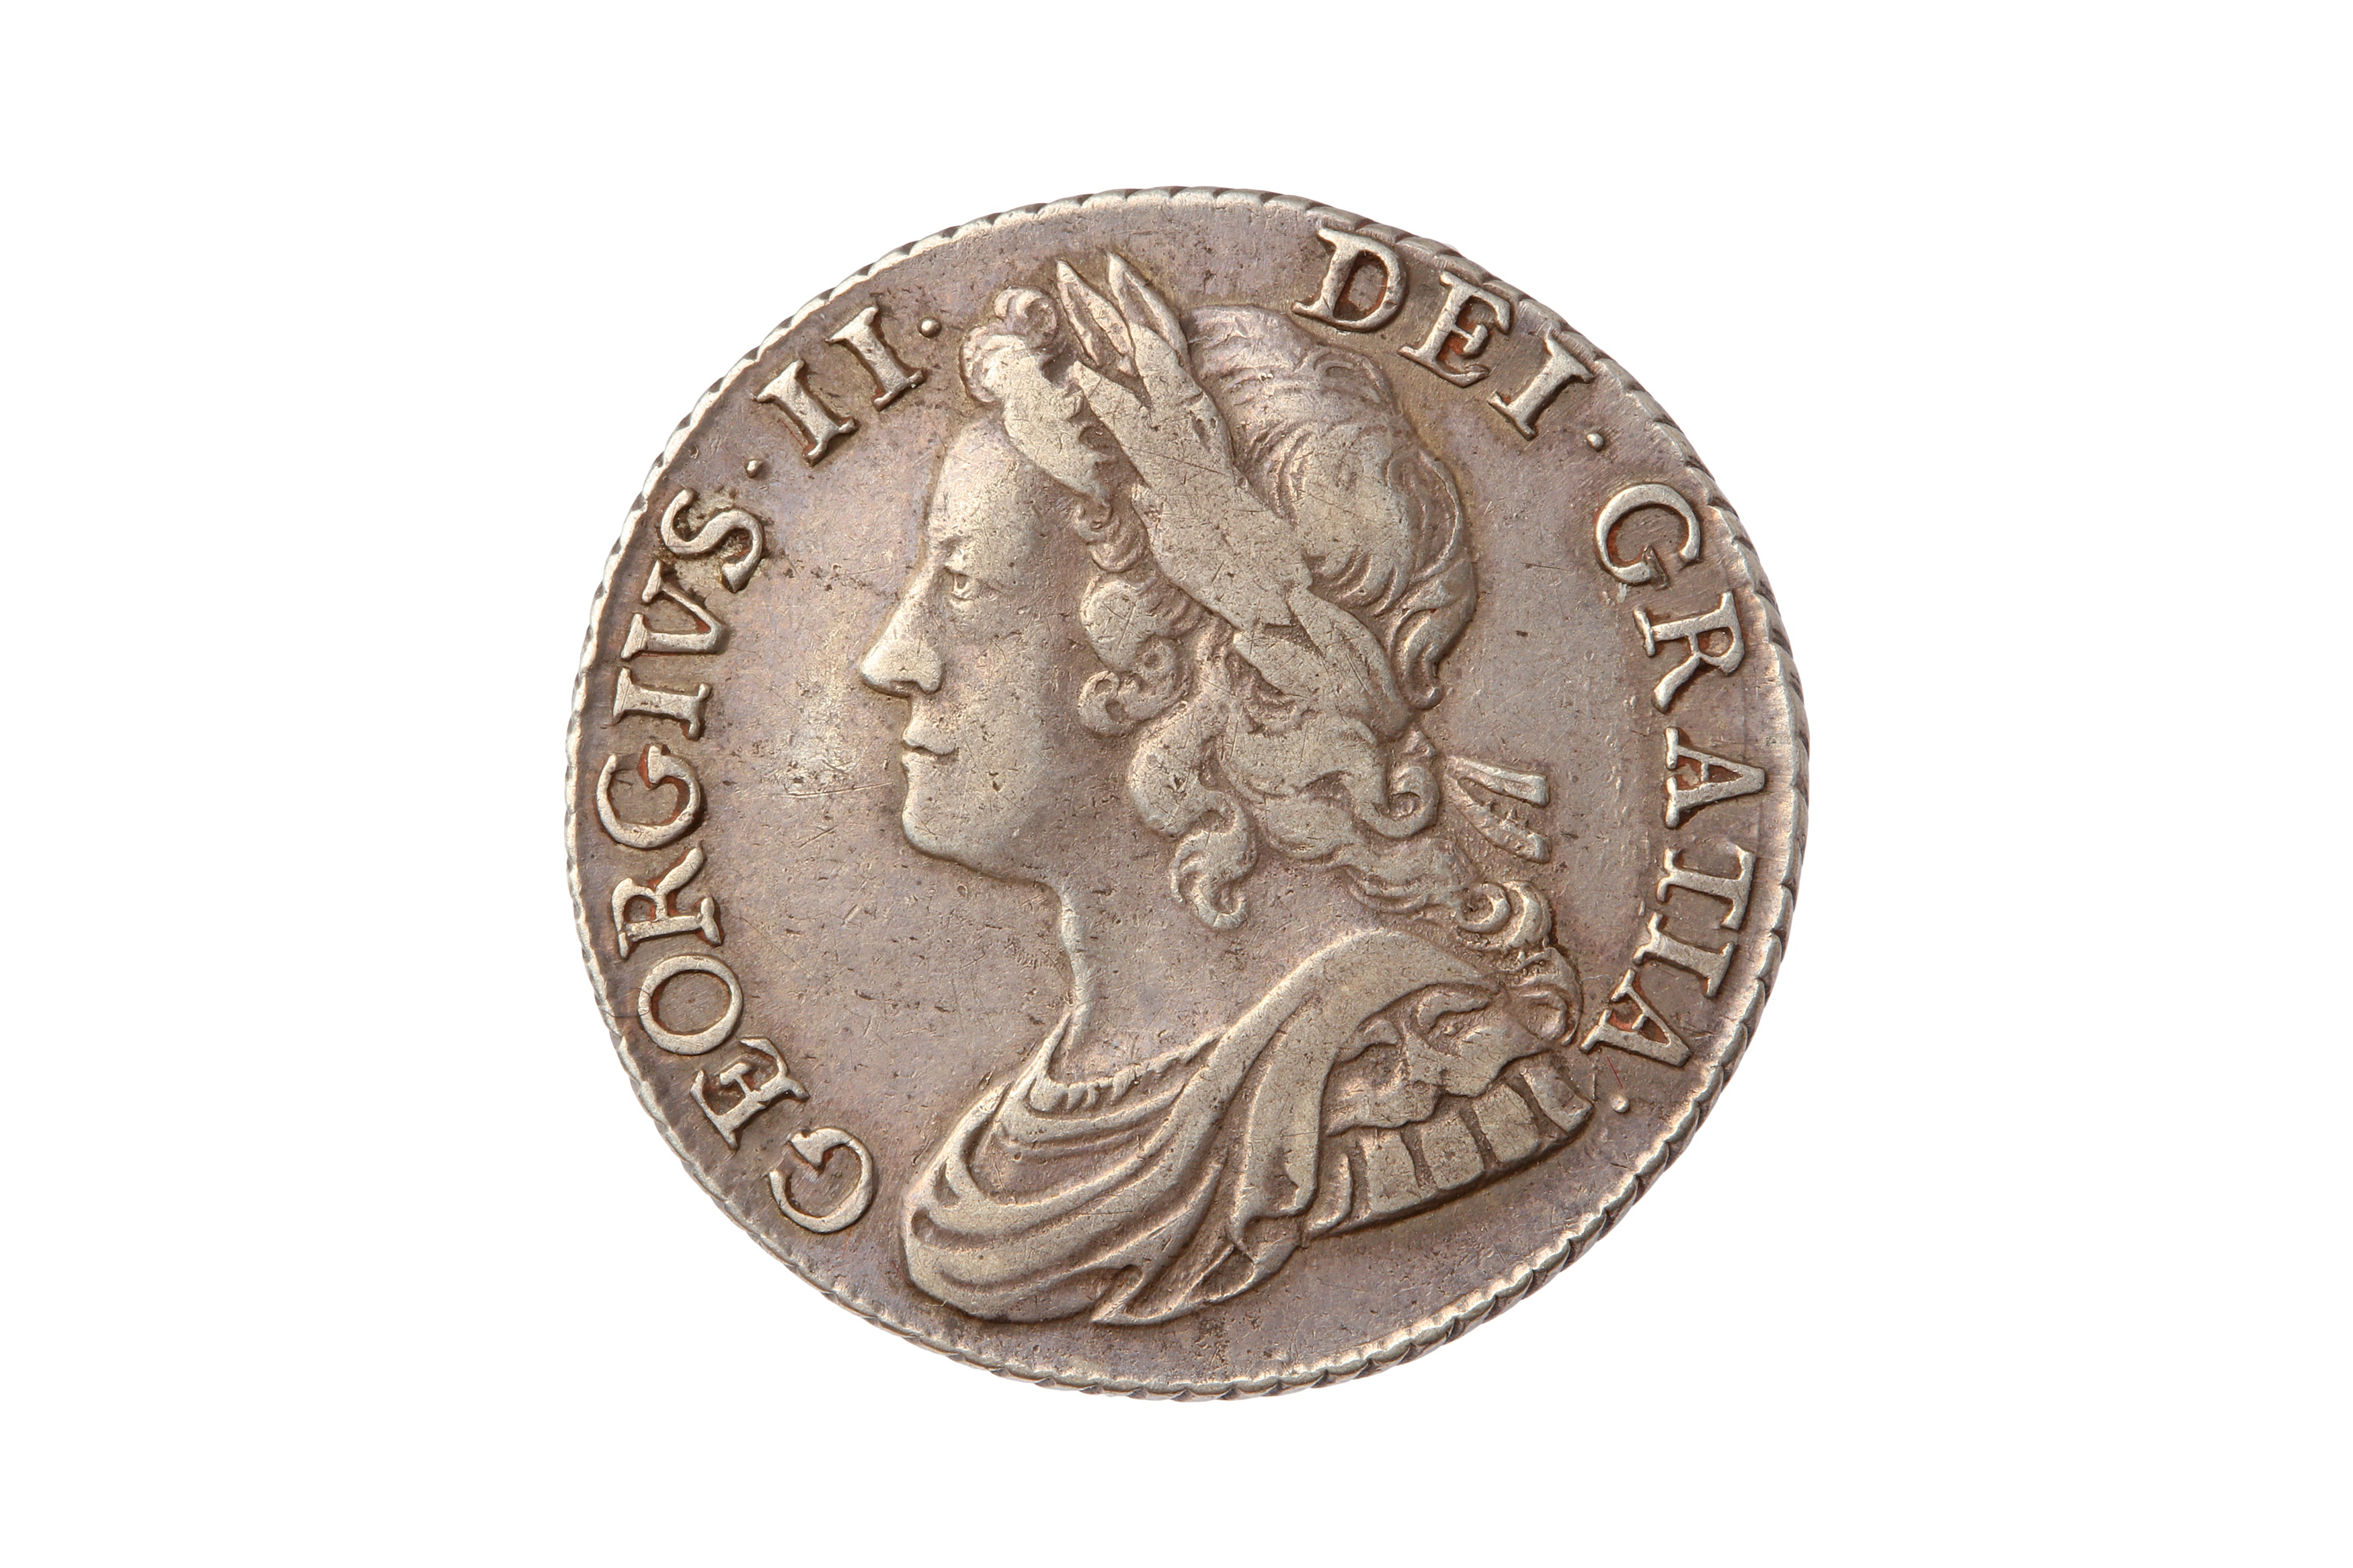 GEORGE II (1727 - 1760), 1741 SHILLING.